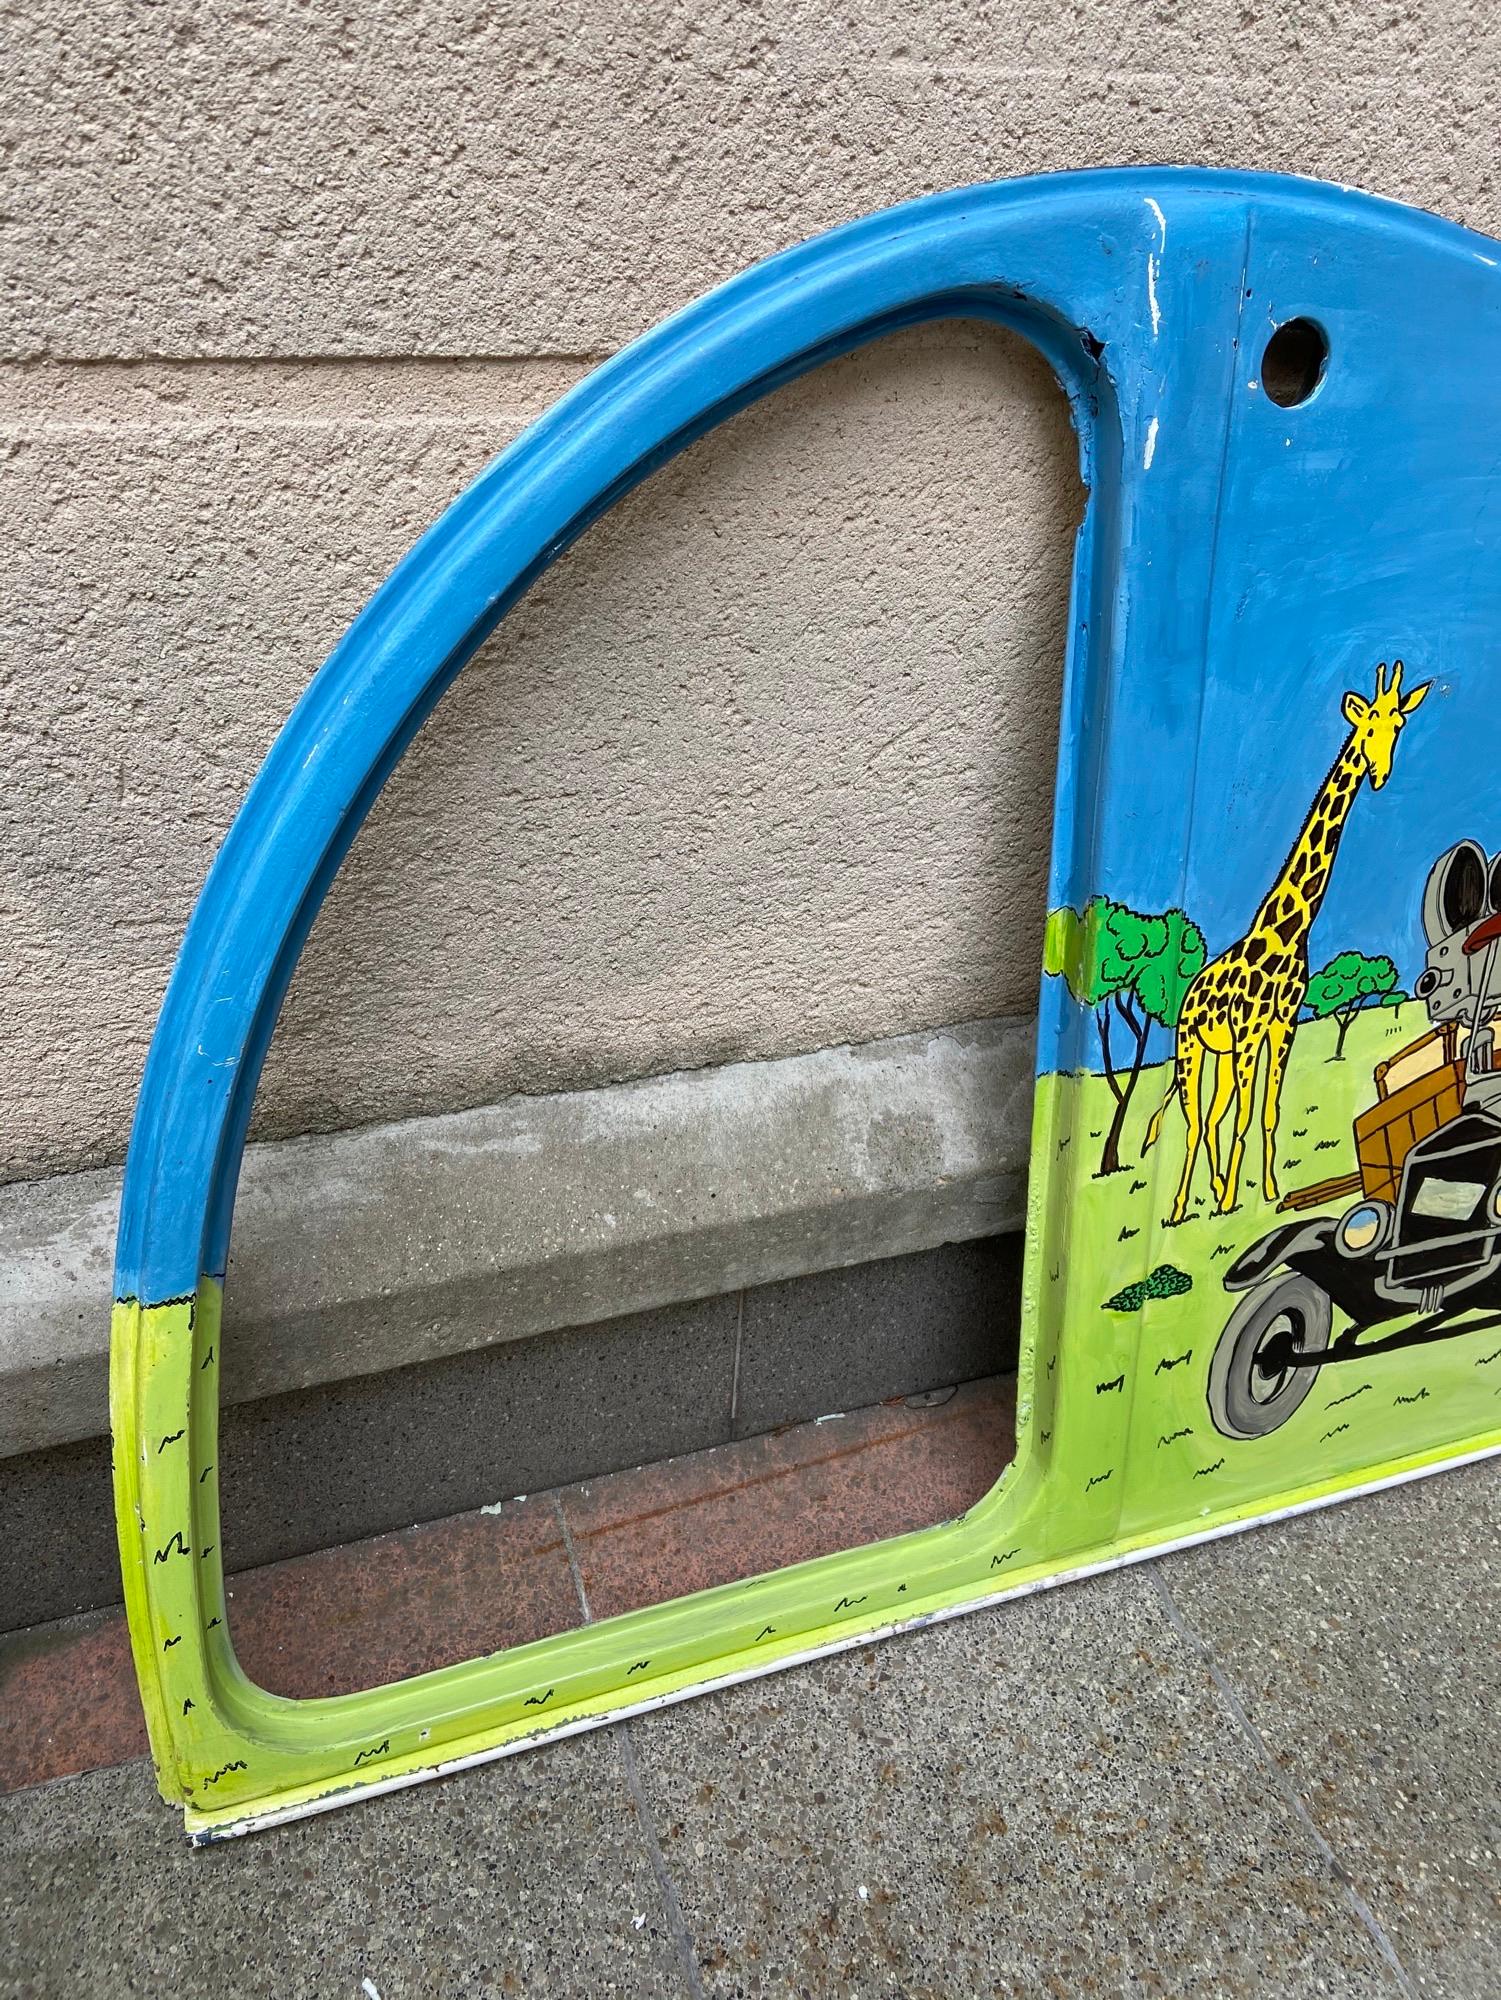 Hand-Painted VINC, Door of Citroën 2CV, Tintin in Congo, 2019, Acrylic